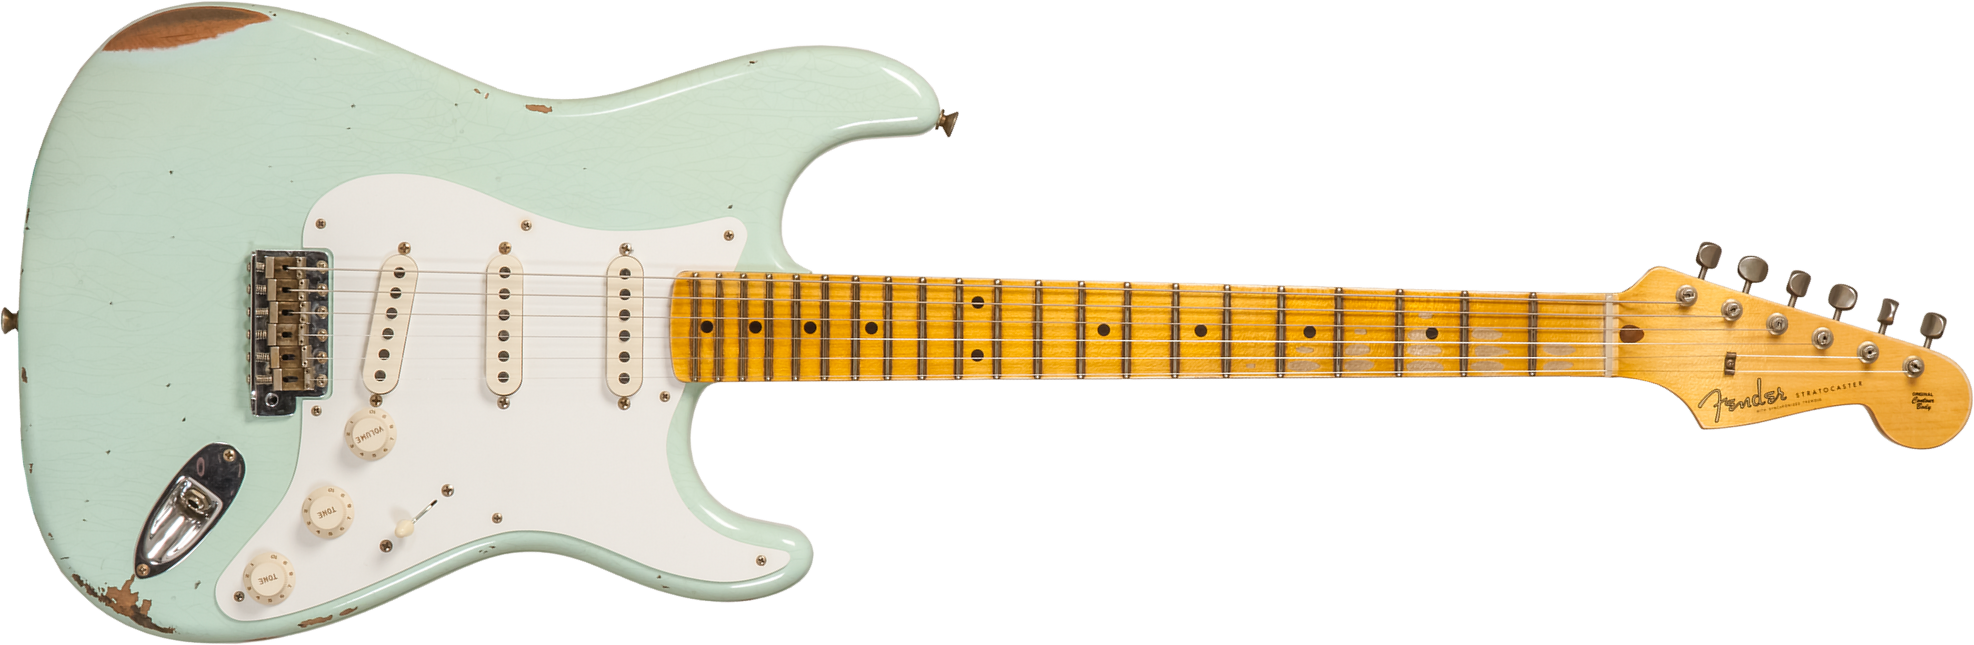 Fender Custom Shop Strat 1958 3s Trem Mn #cz572338 - Relic Aged Surf Green - E-Gitarre in Str-Form - Main picture